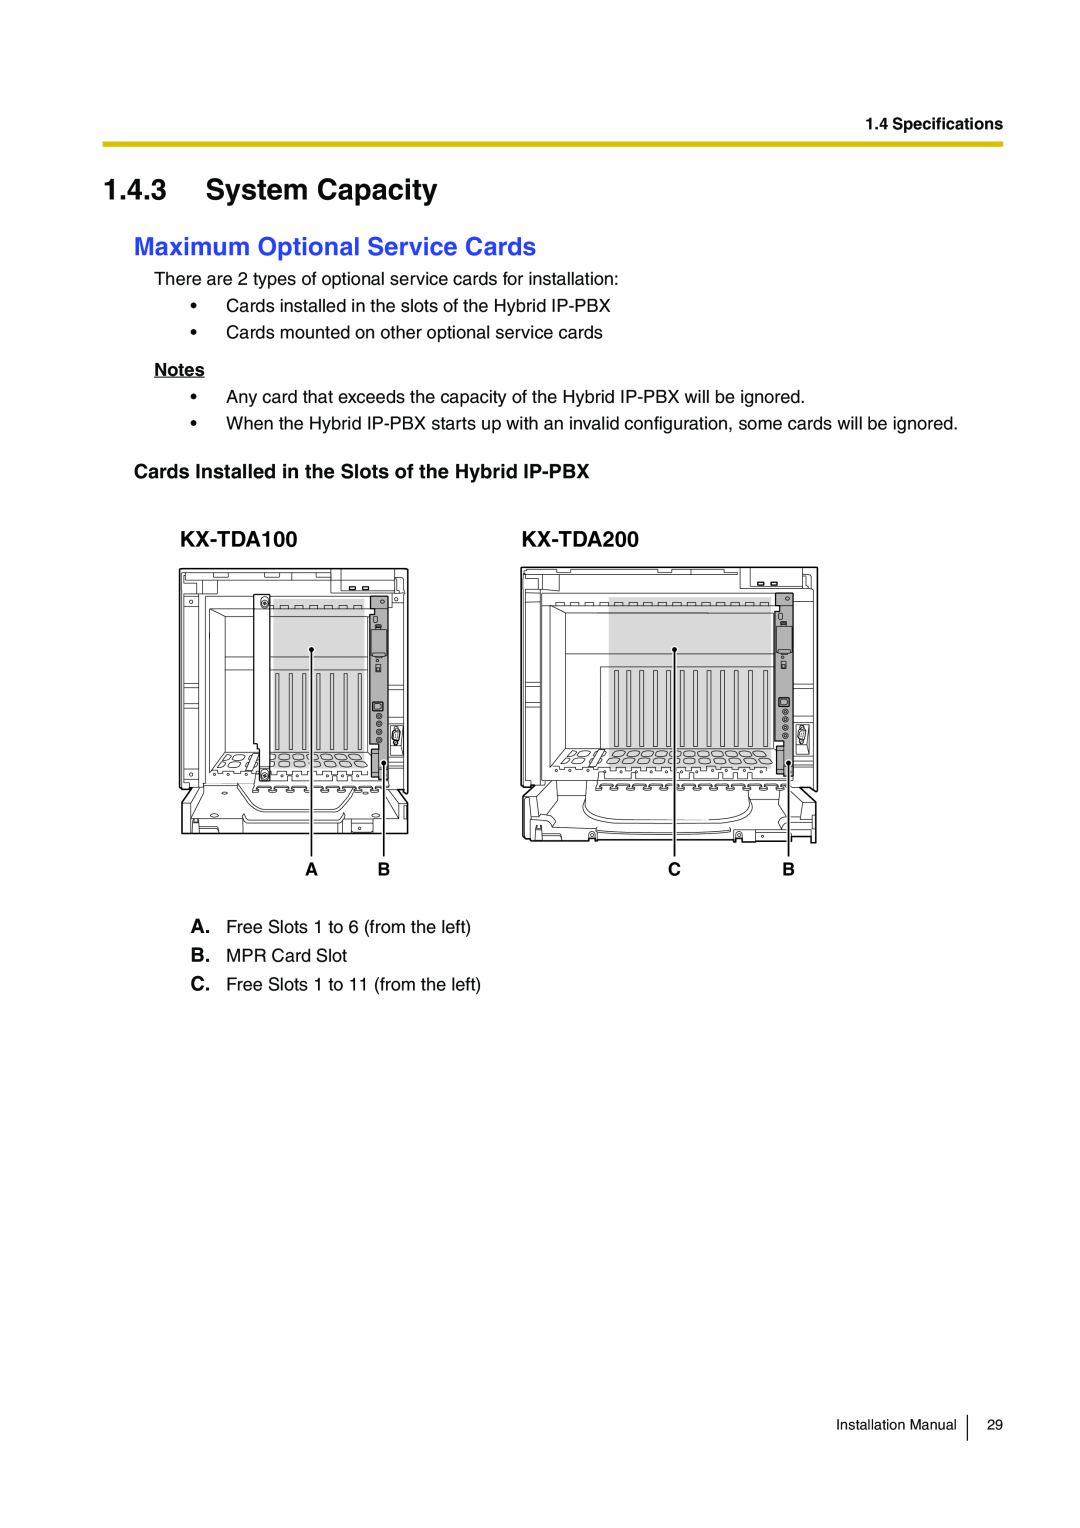 Panasonic installation manual System Capacity, Maximum Optional Service Cards, KX-TDA100KX-TDA200, A Bcb 